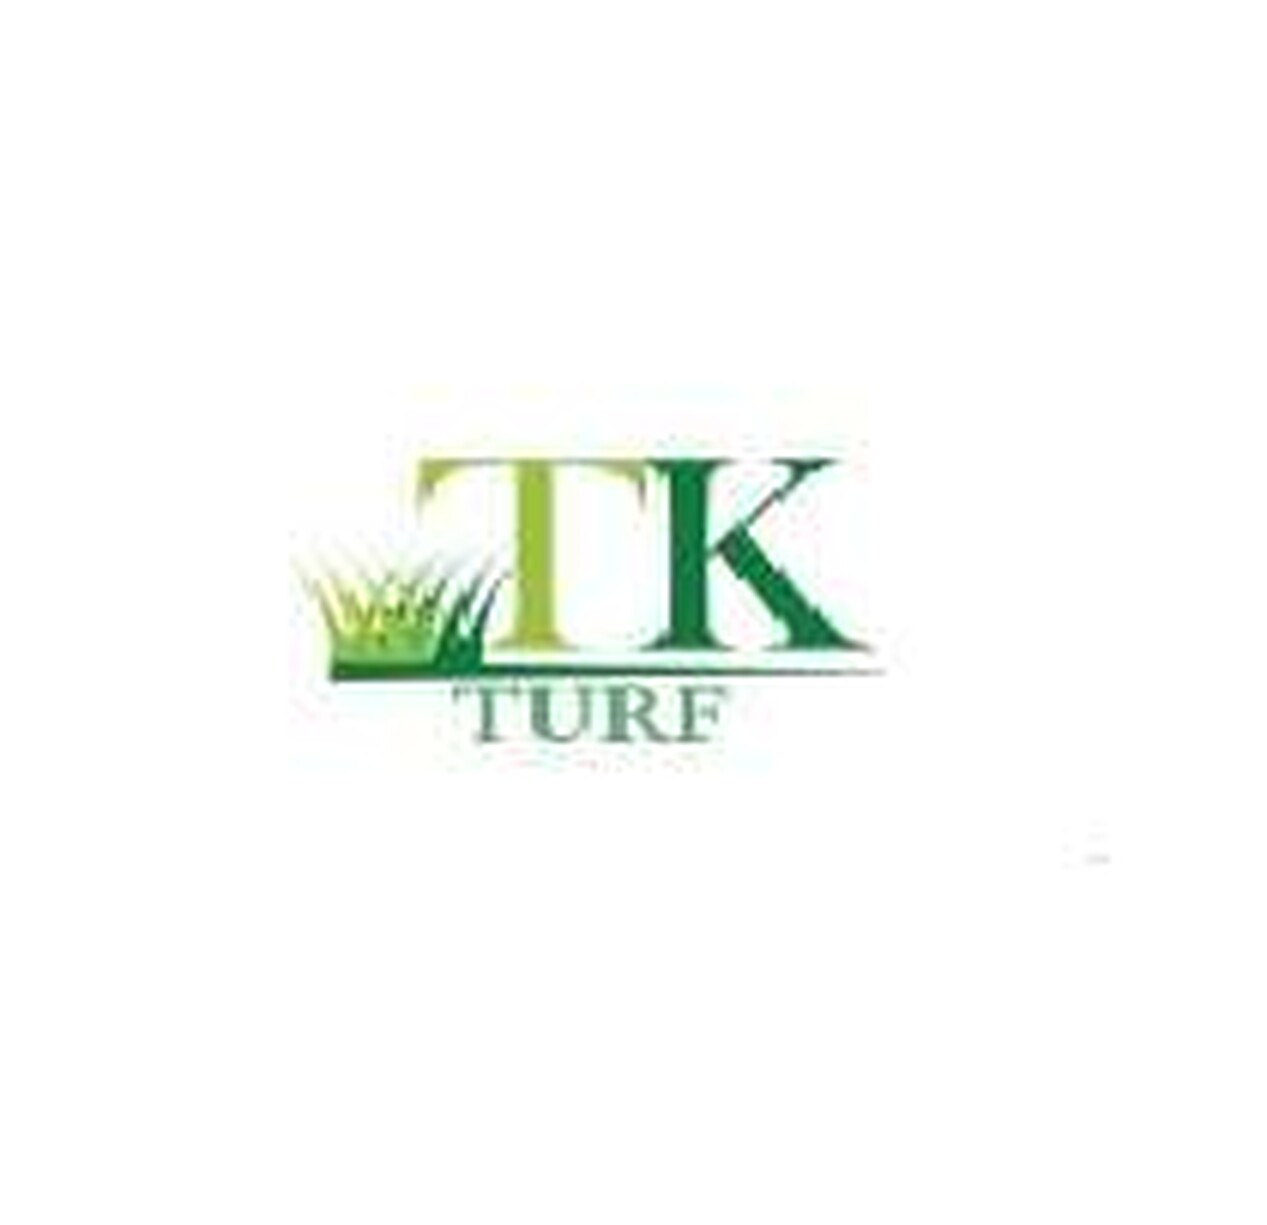 TK Turf of Palm Beach